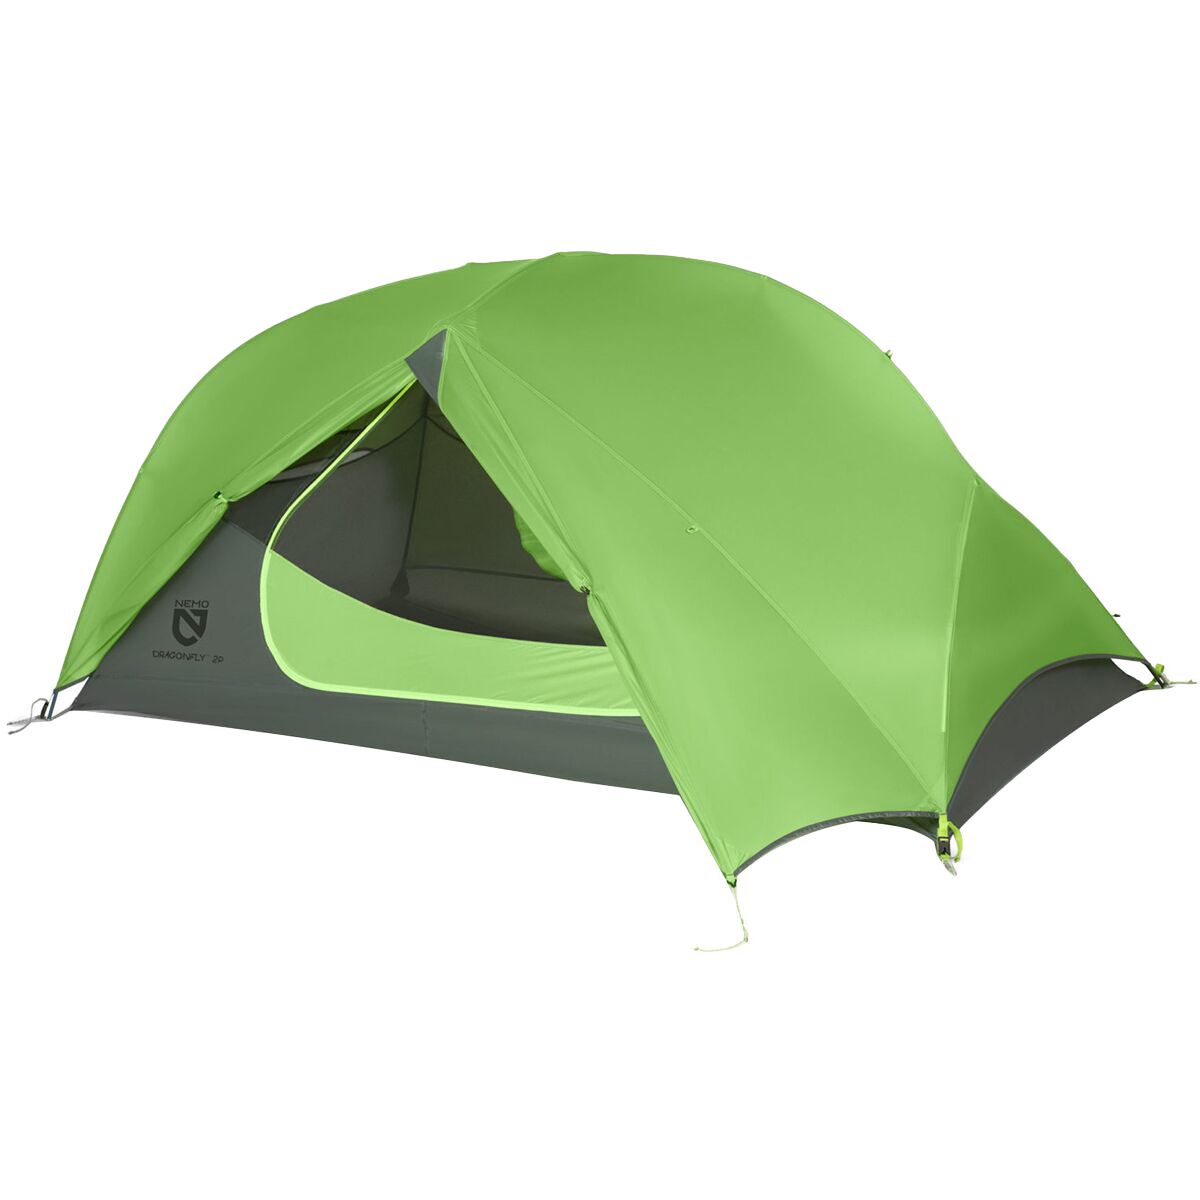 NEMO Equipment Inc. Dragonfly Tent: 2-Person 3-Season